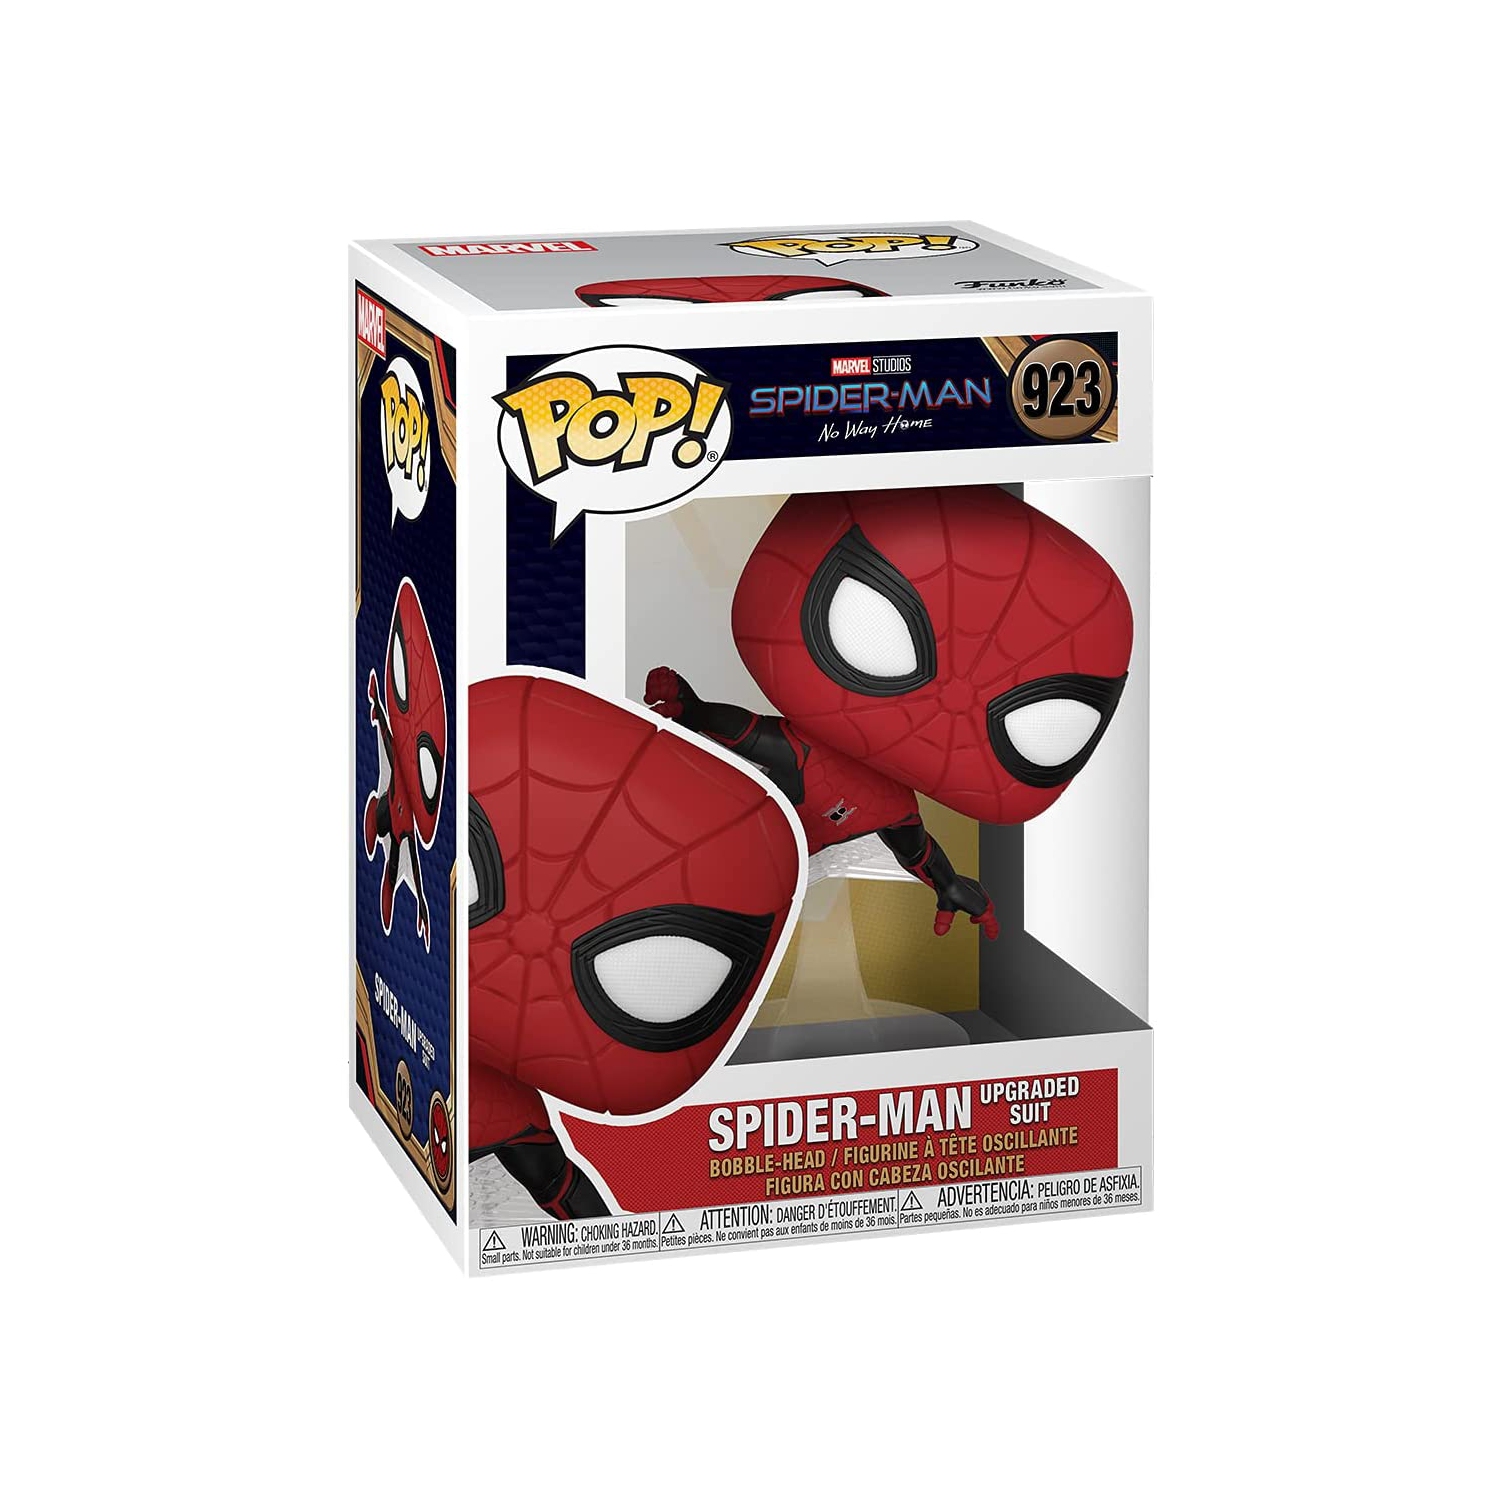 Pop Marvel Spider-Man No Way home 3.75 Inch Action Figure - Spider-Man Upgraded Suit #923